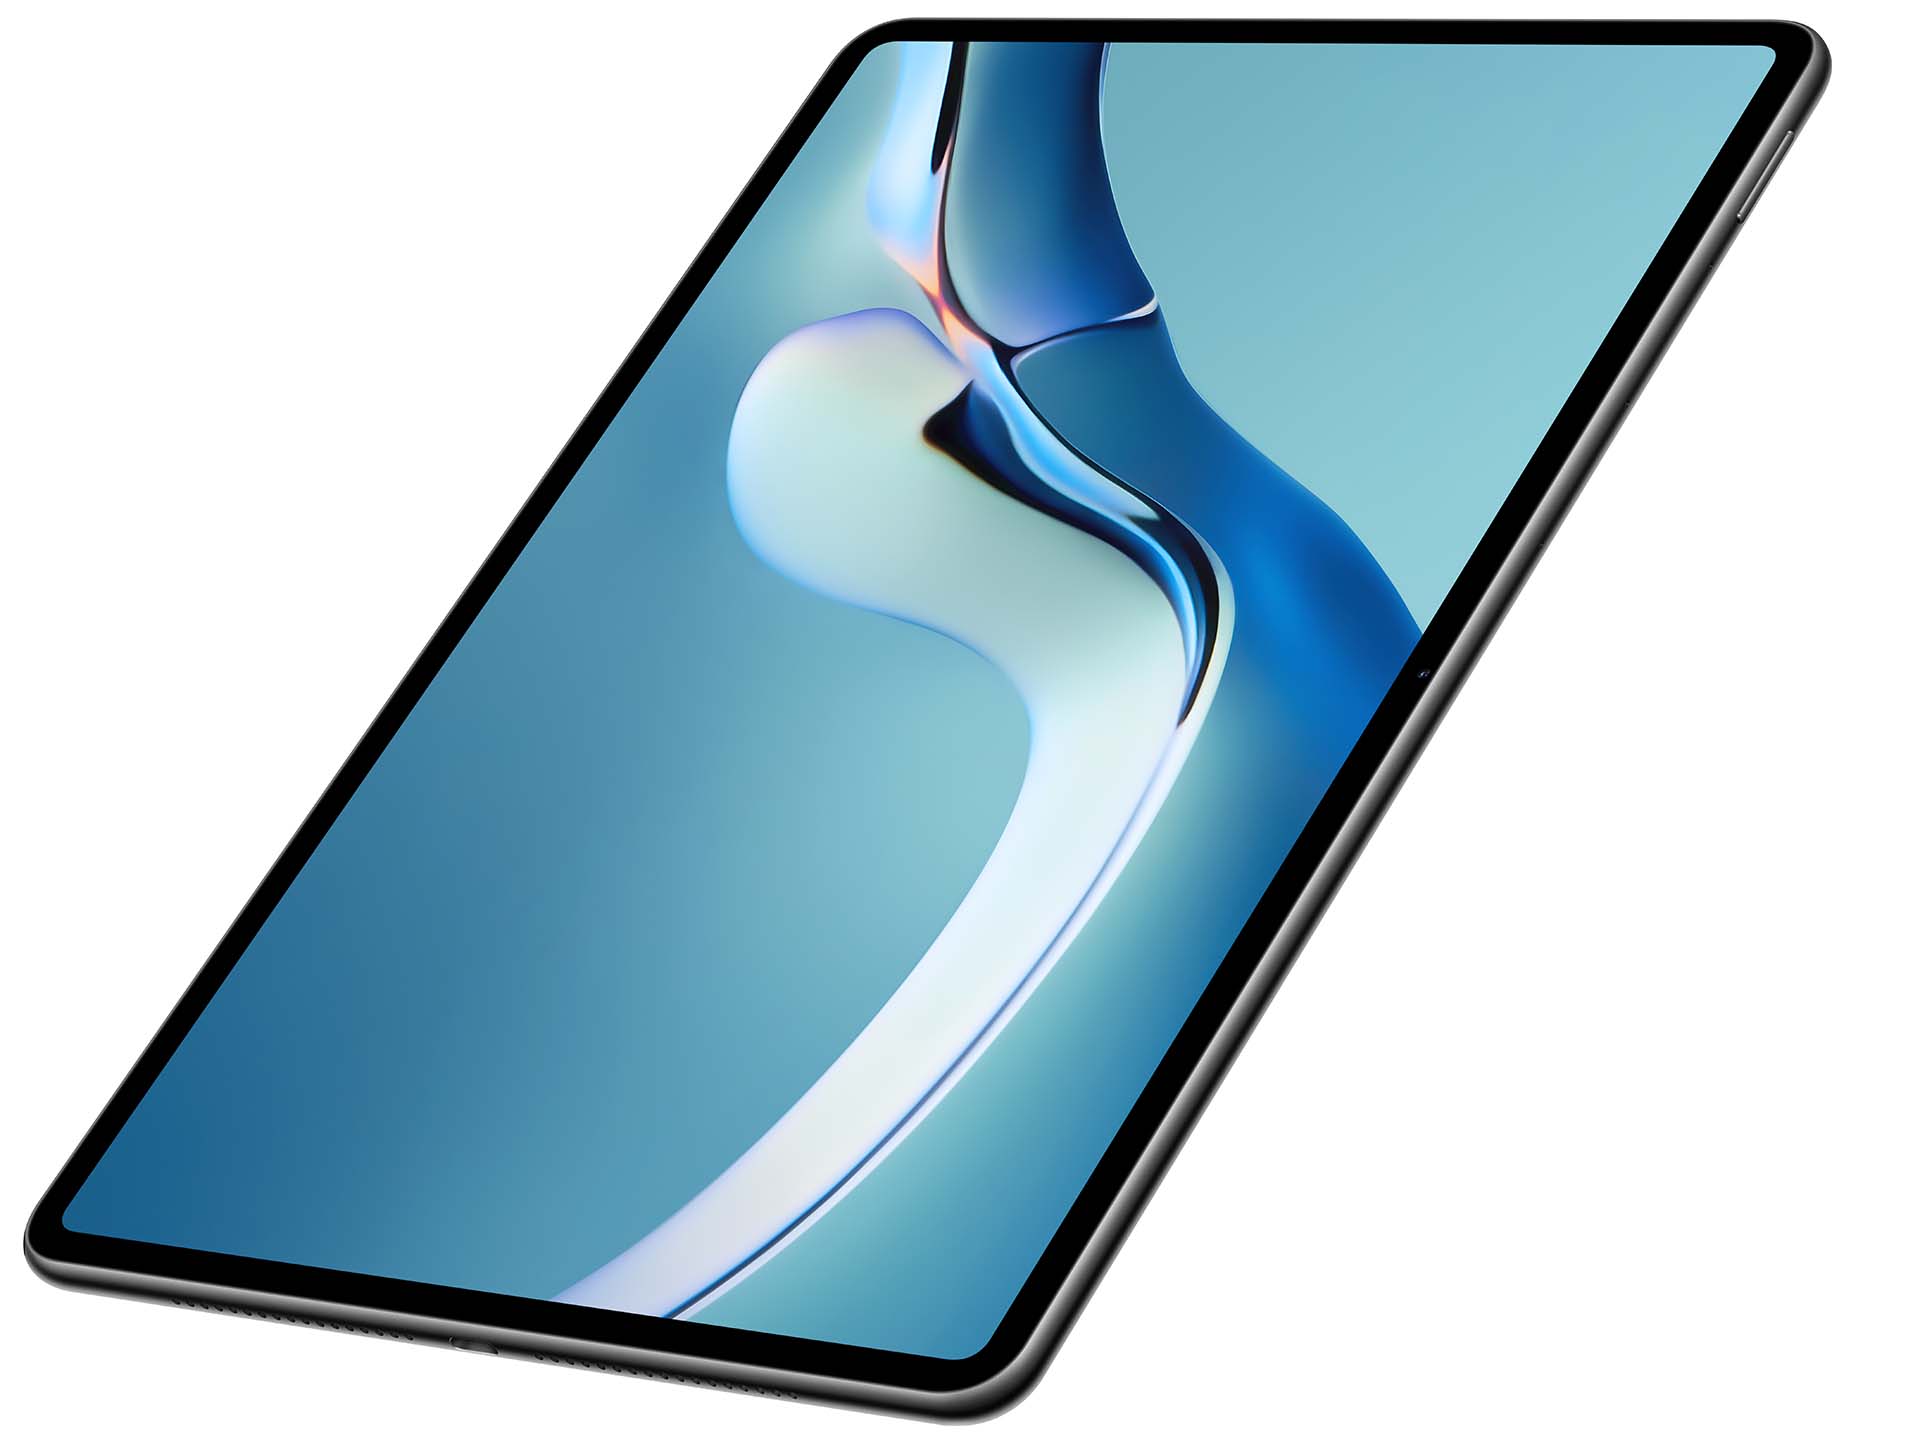 Recensione del Tablet Huawei MatePad Pro 12.6: Tablet di fascia